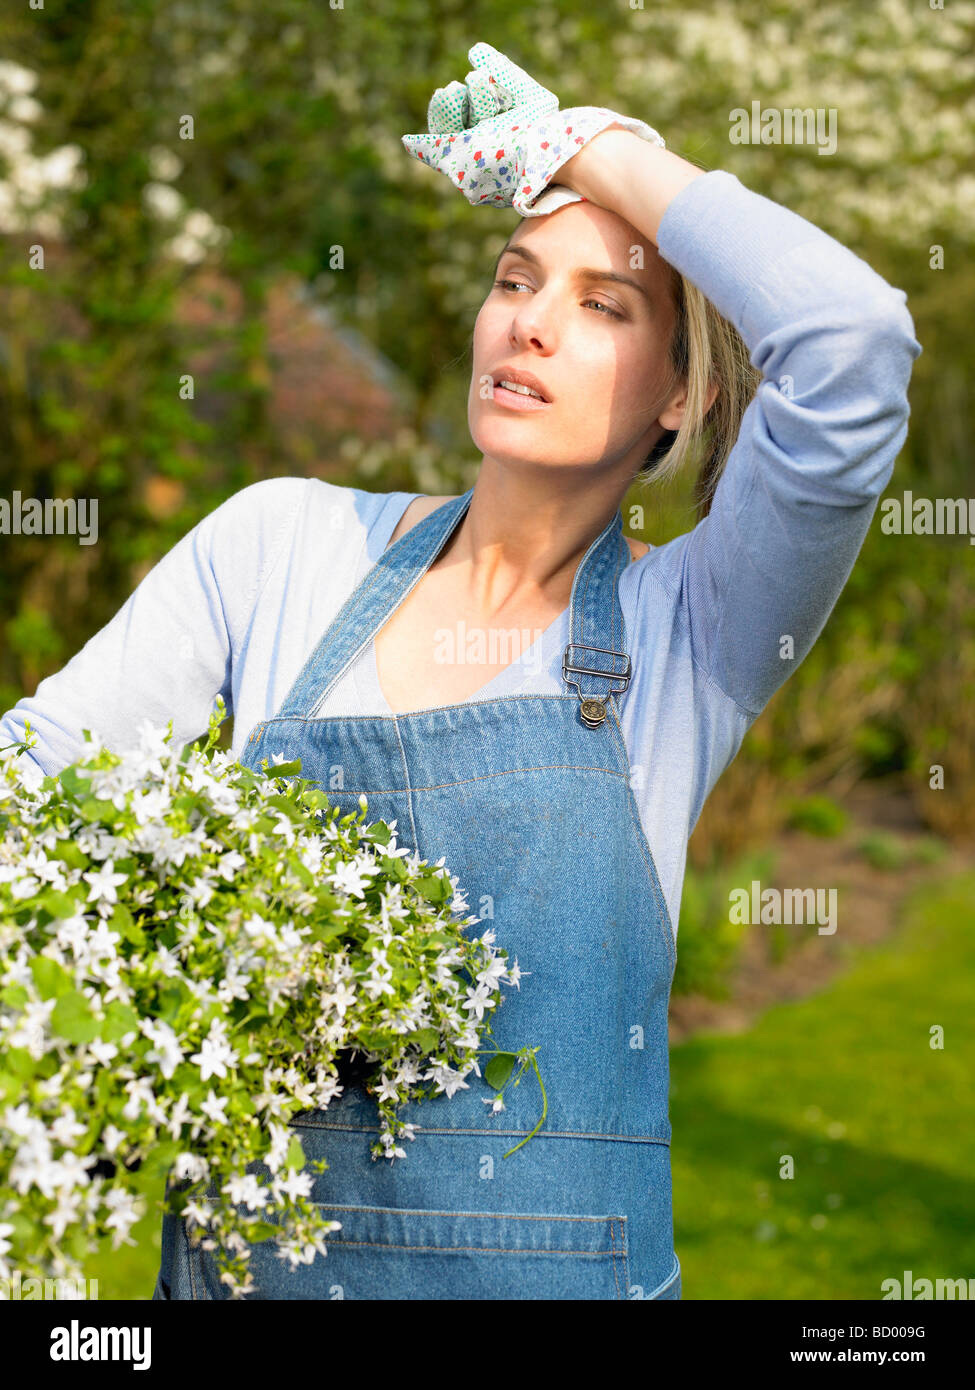 Woman holding a flower pot Stock Photo